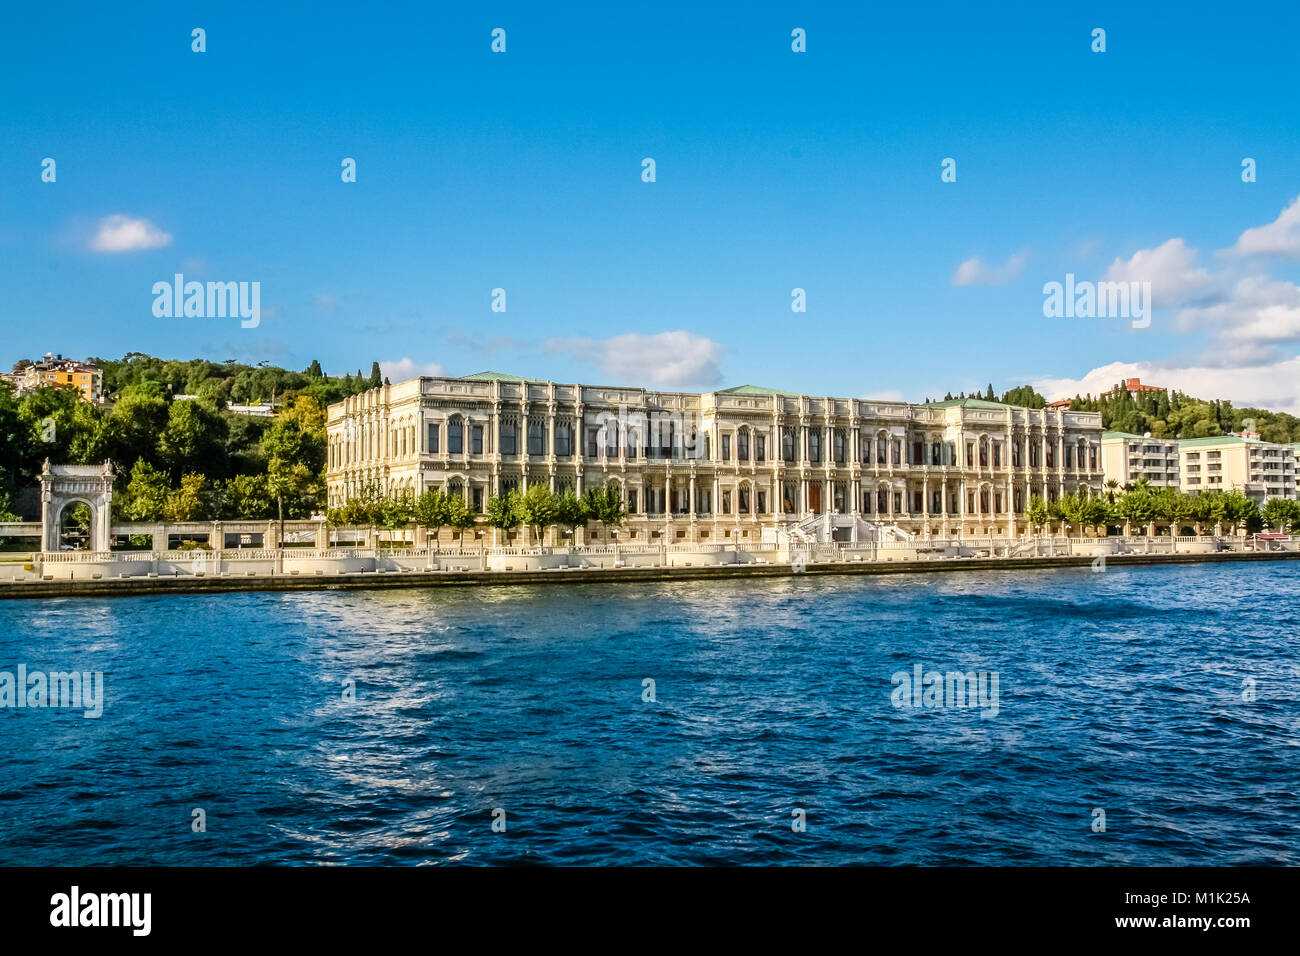 Çırağan Palace Kempinsk, an Ottoman Imperial Palace and Hotel on the Bosphorus, Istanbul. Stock Photo